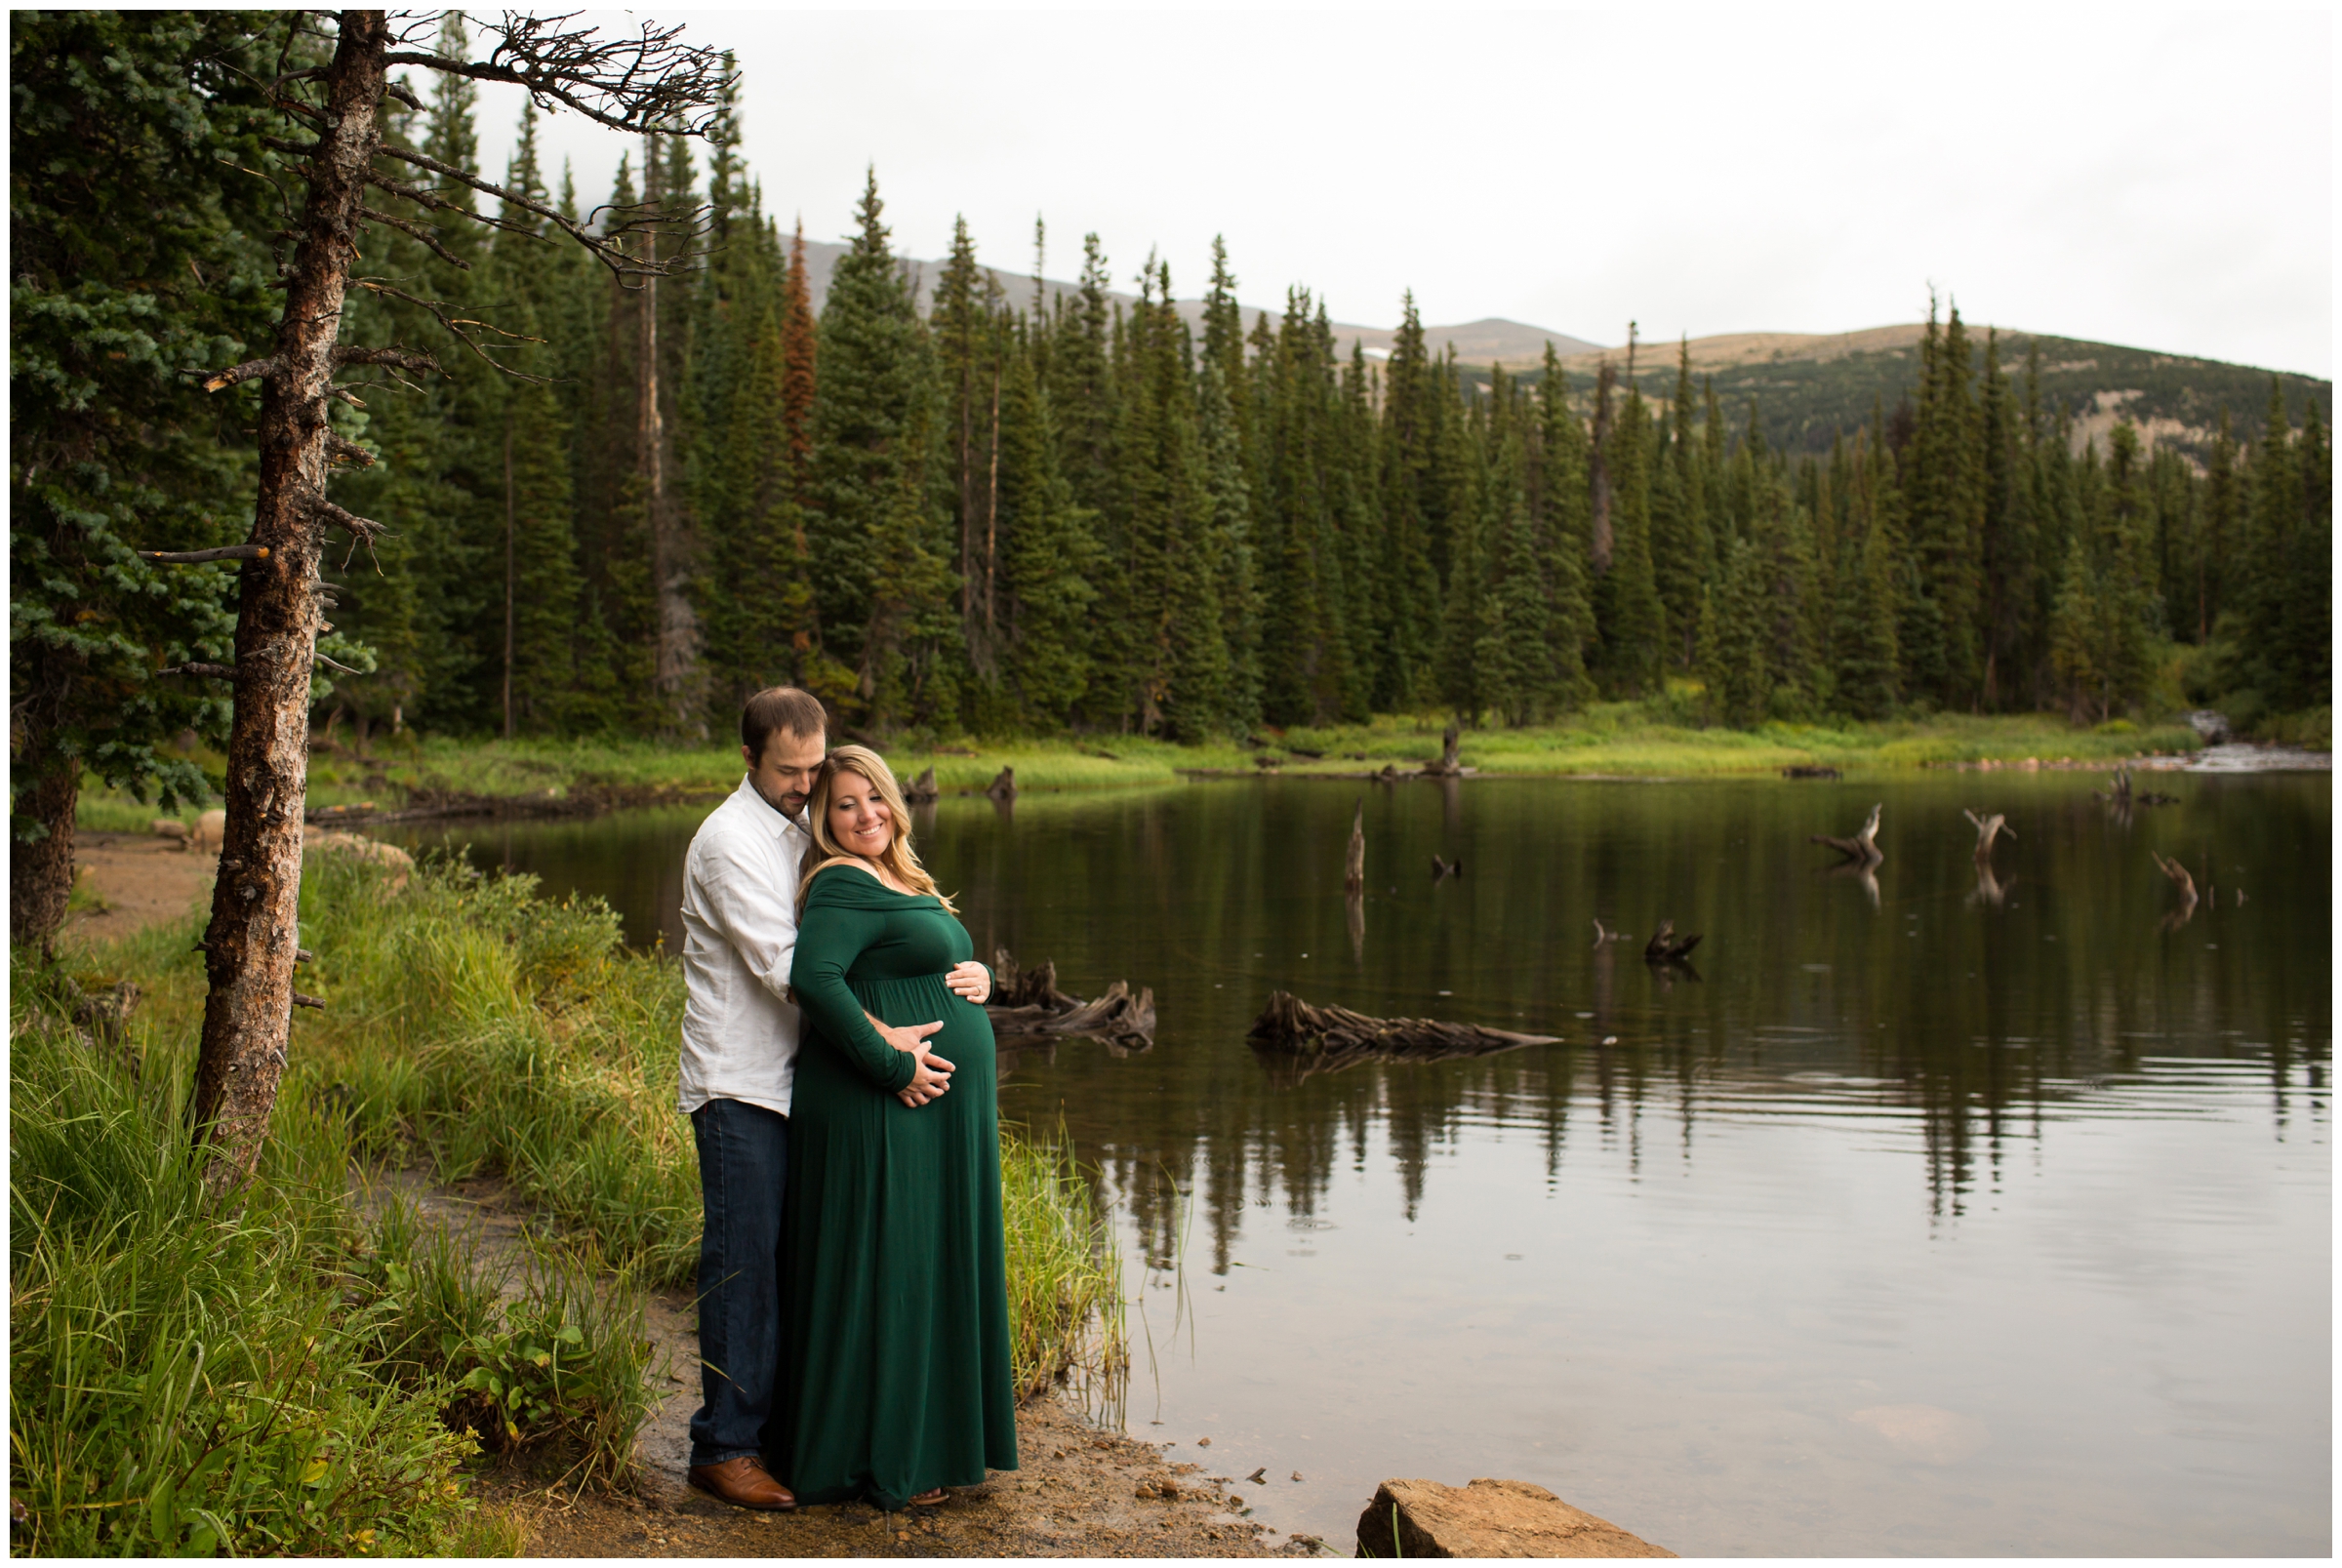 Colorado mountain maternity photos at Brainard Lake by Longmont photographer Plum Pretty Photography